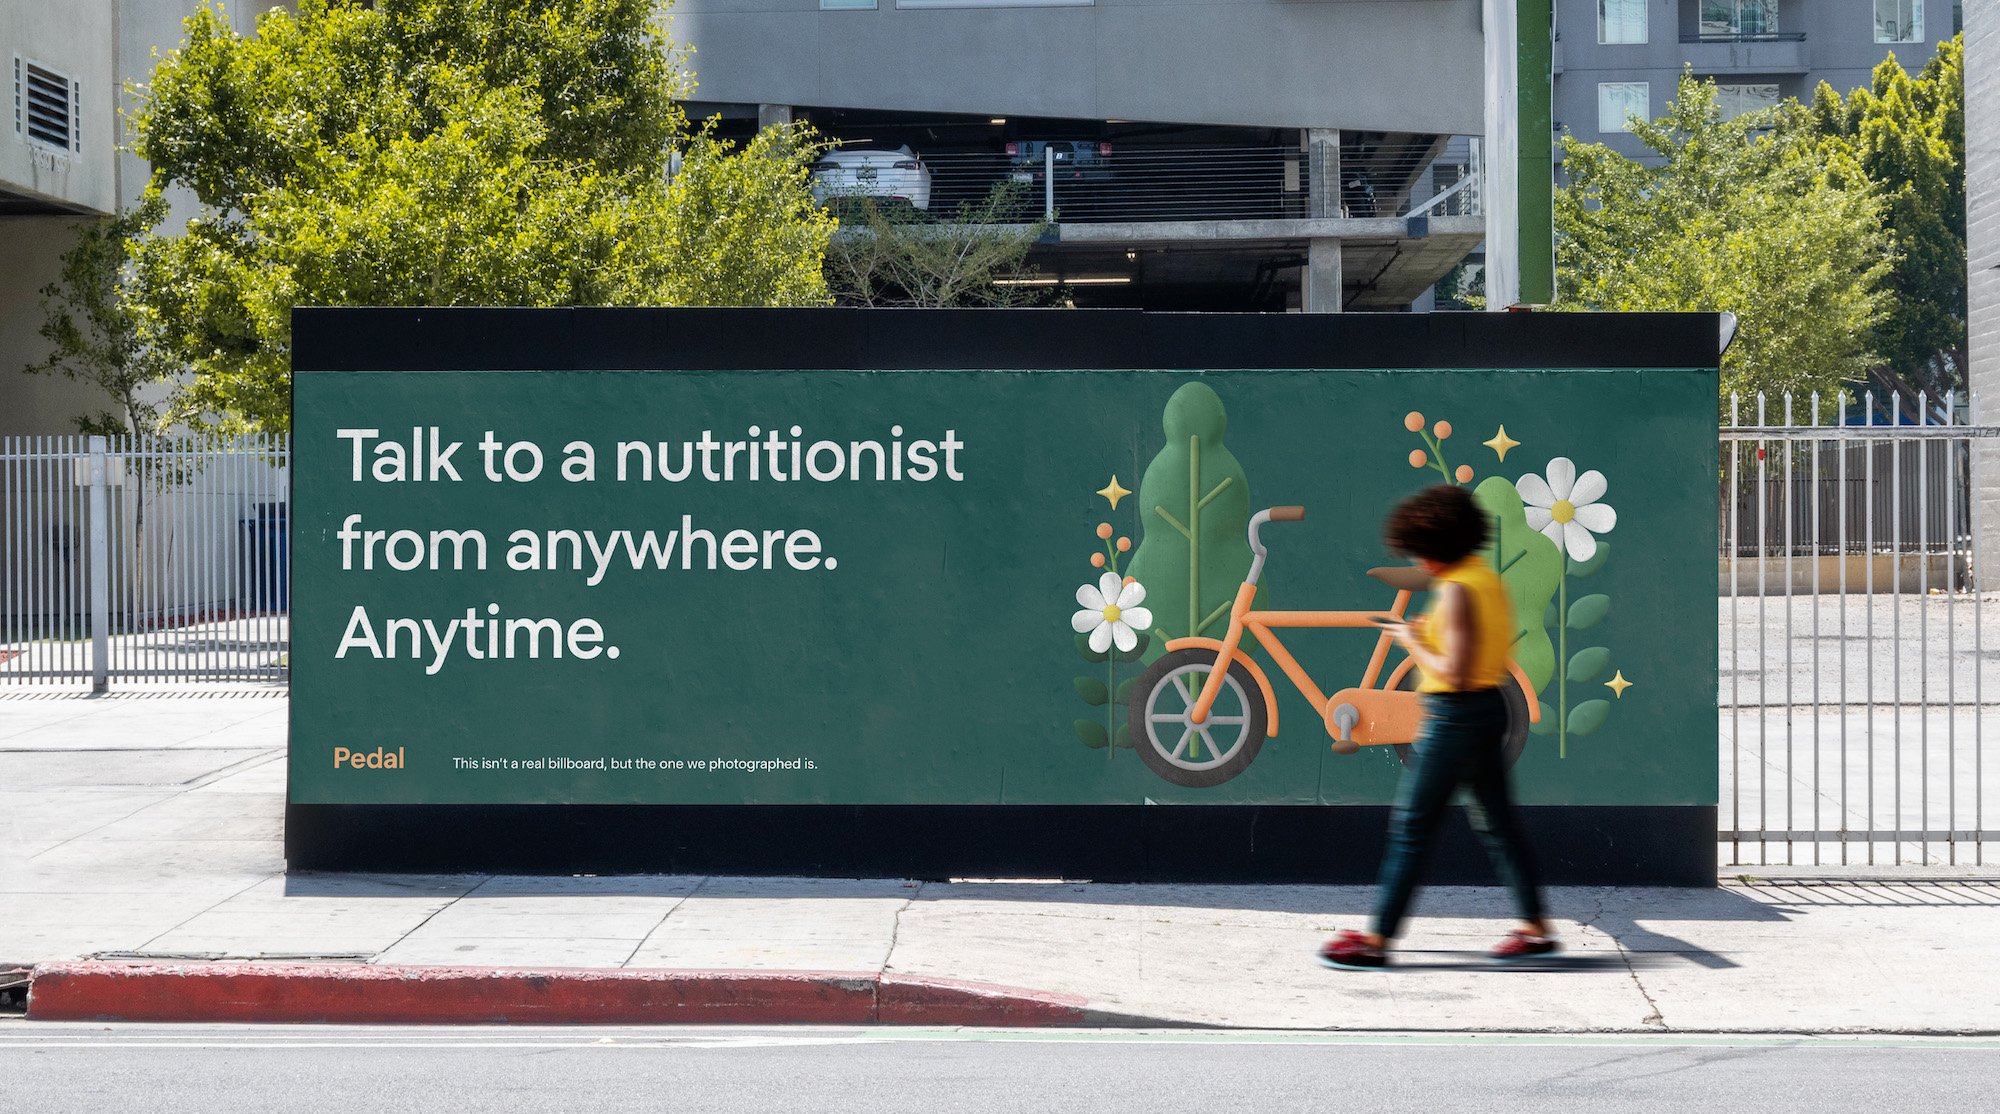 sidewalk billboard sign hoarding mockup psd nutrition 343